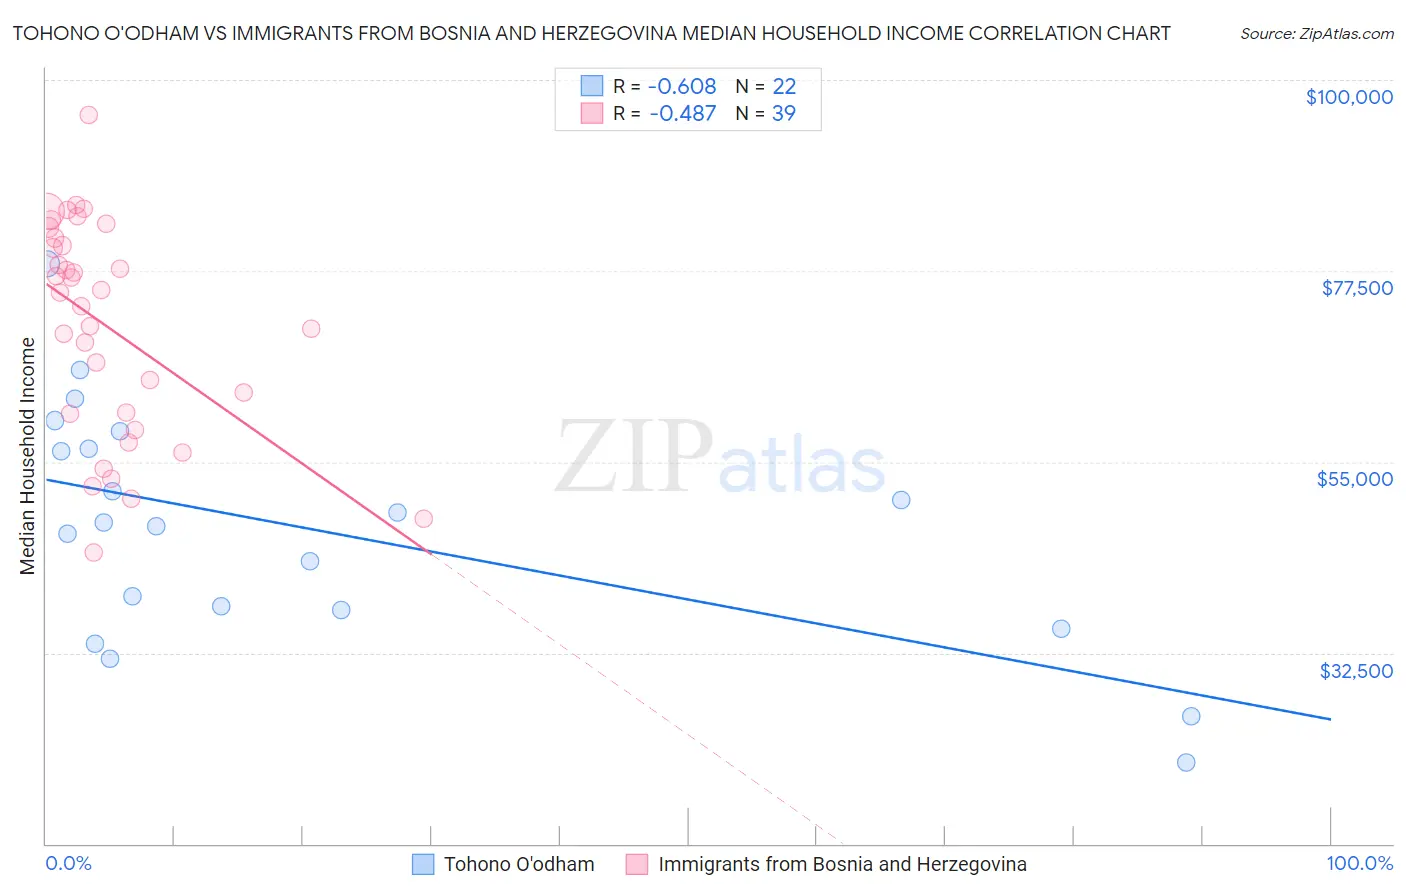 Tohono O'odham vs Immigrants from Bosnia and Herzegovina Median Household Income